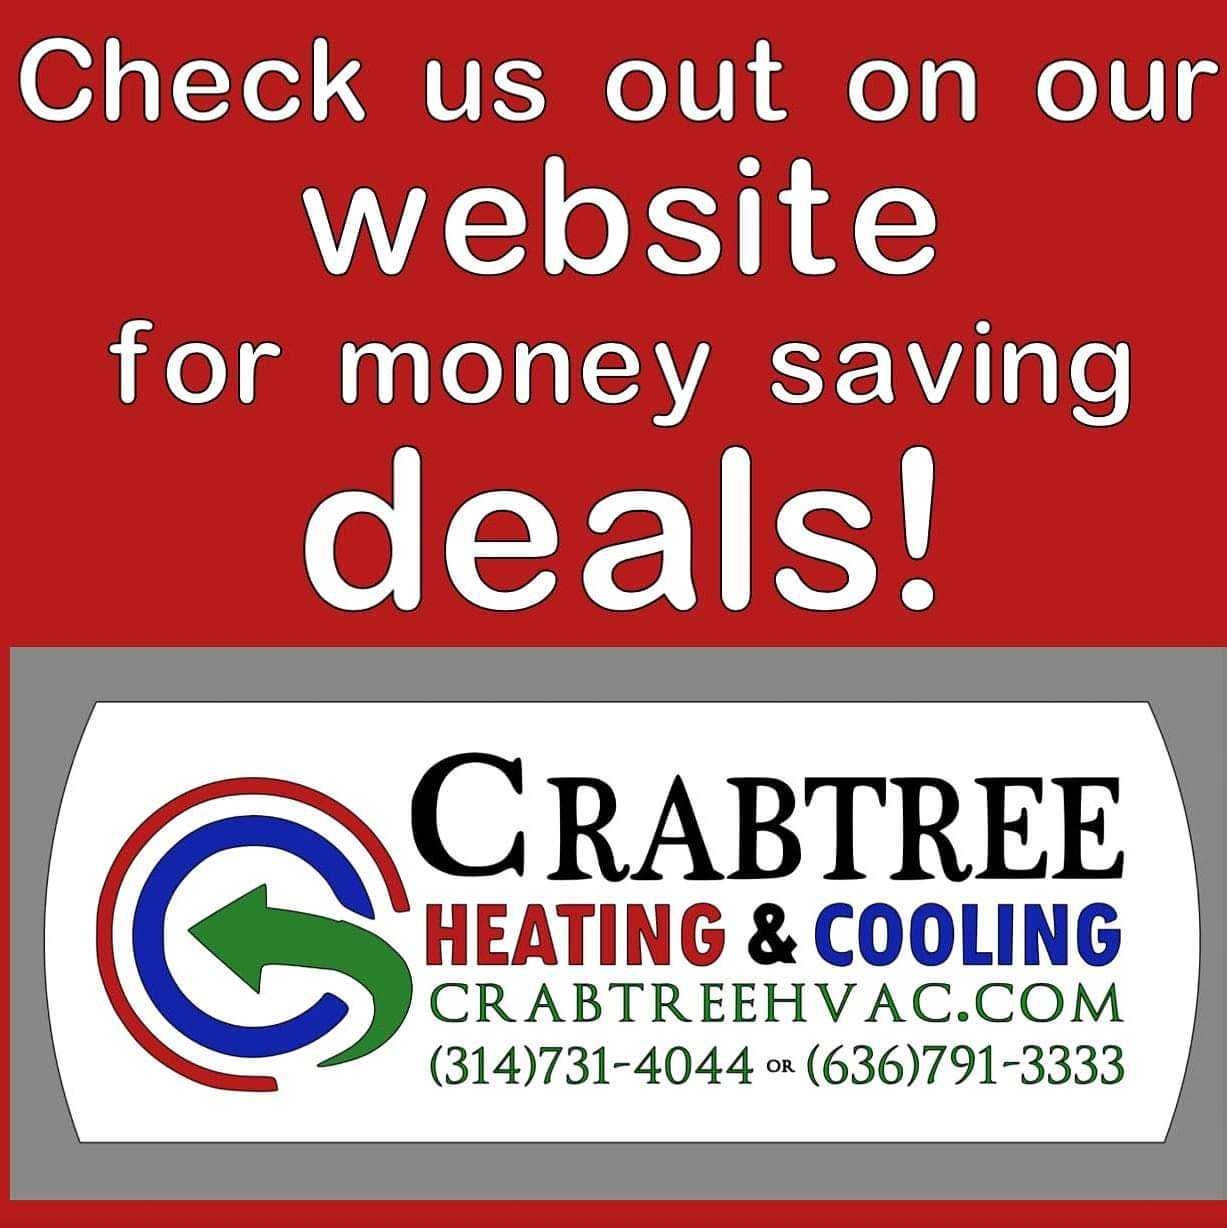 Crabtree Heating & Cooling 76 Deer Crossing, Wright City Missouri 63390